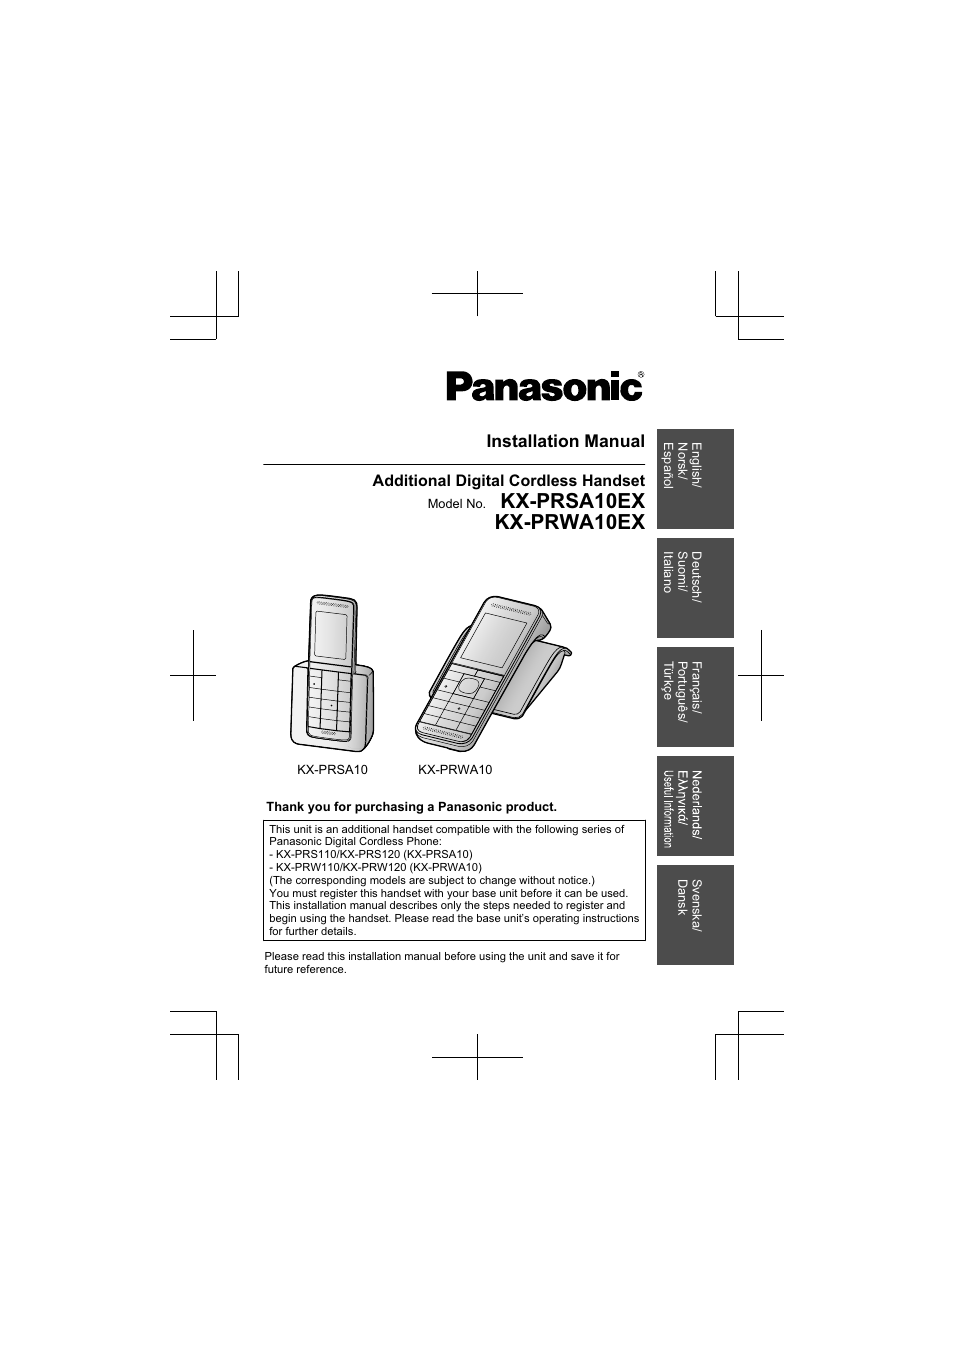 Panasonic KXPRSA10EX User Manual | 116 pages | Also for: KXPRWA10EX